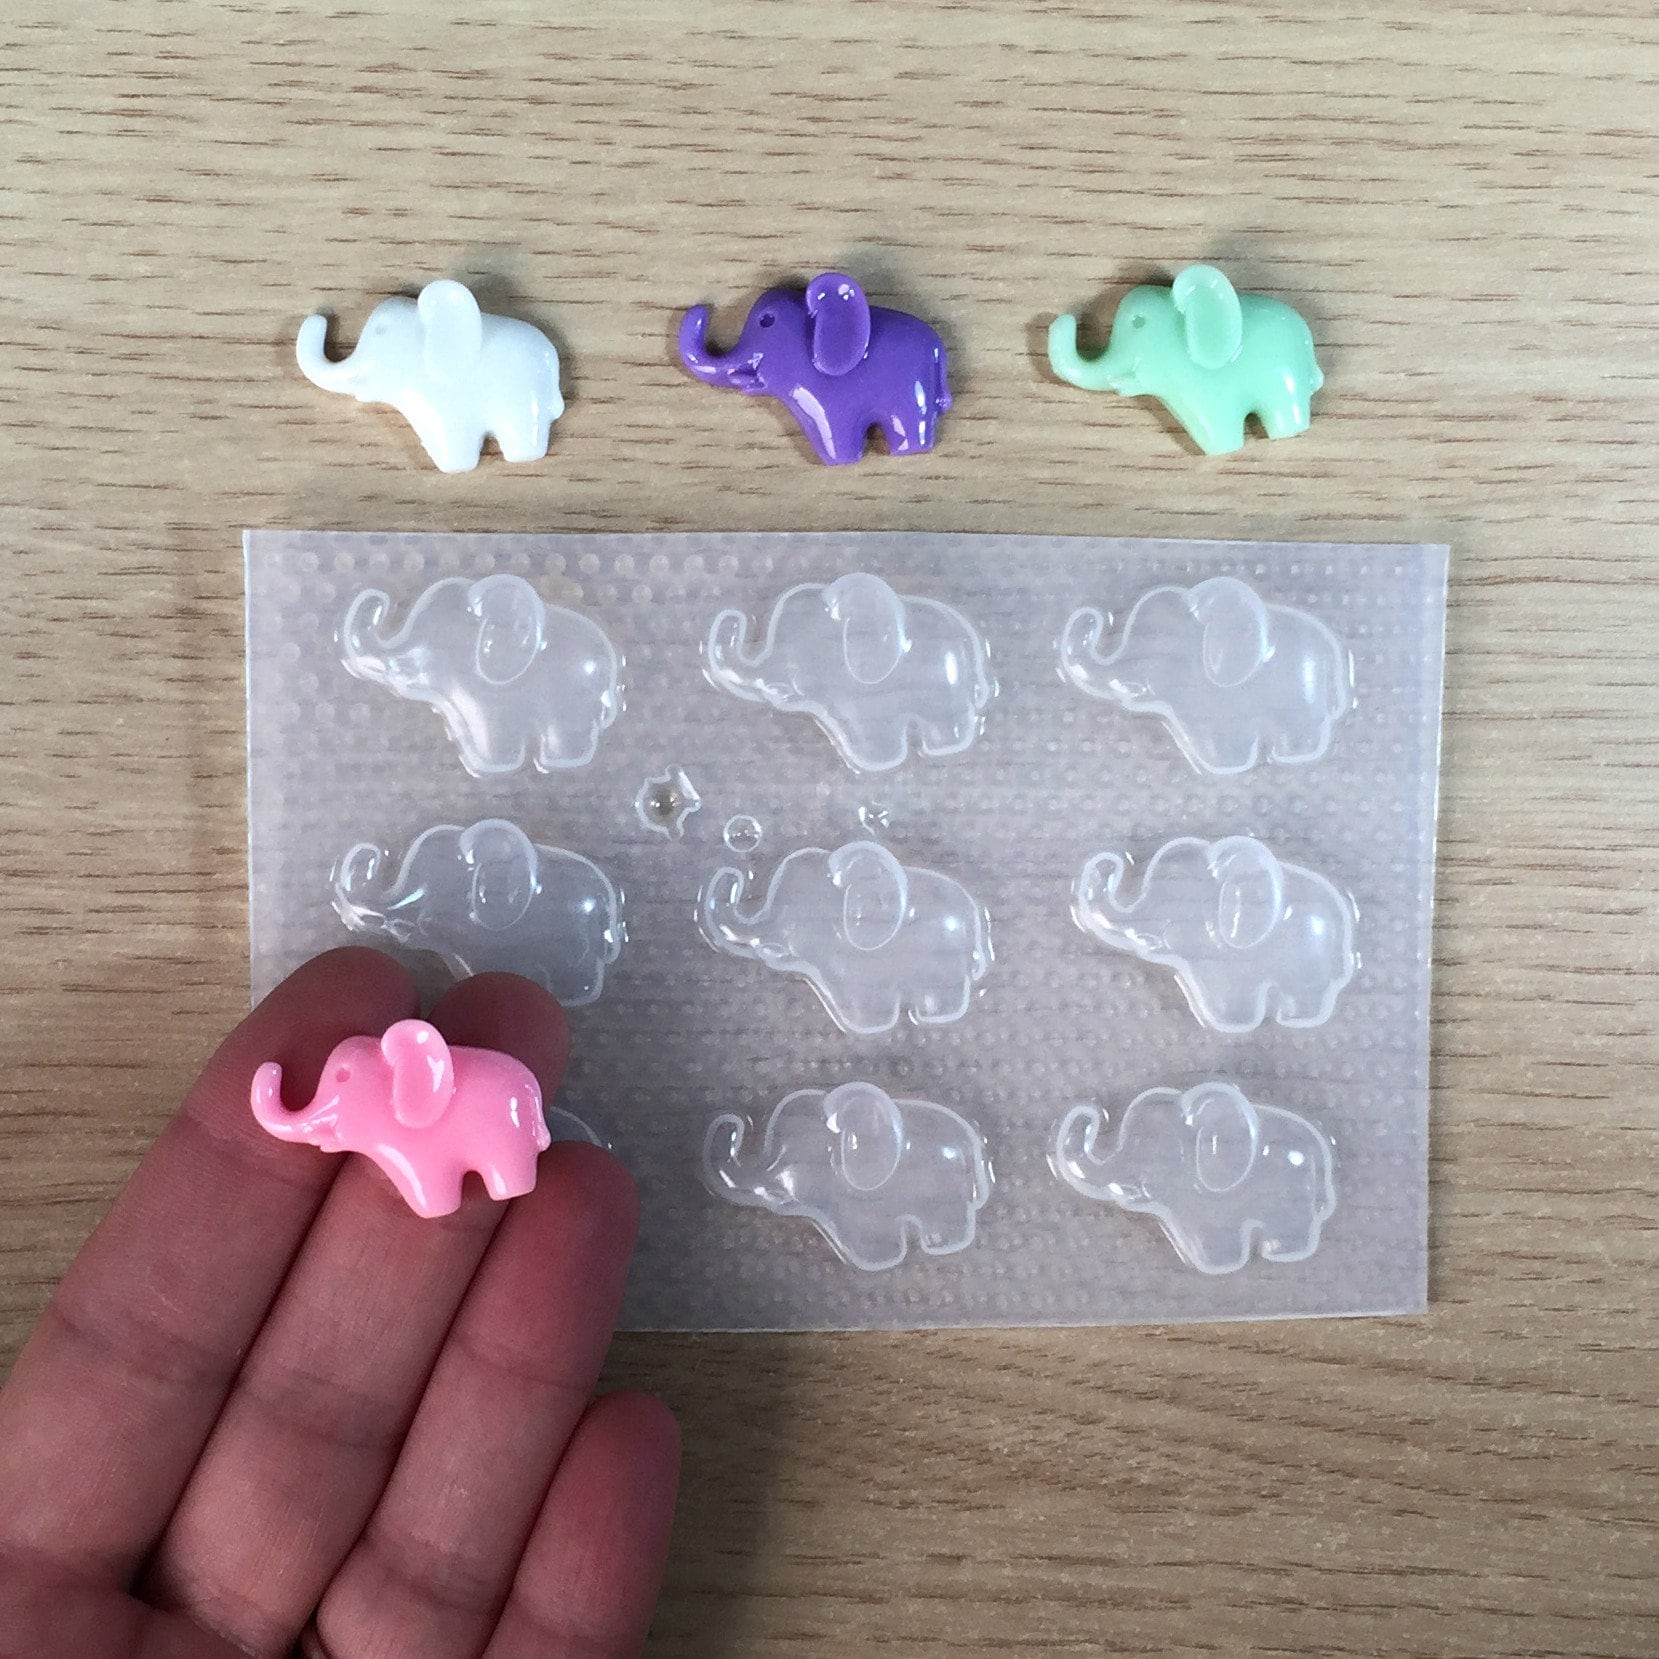 Elephant Silicone Mold, Small UV Resin Mold